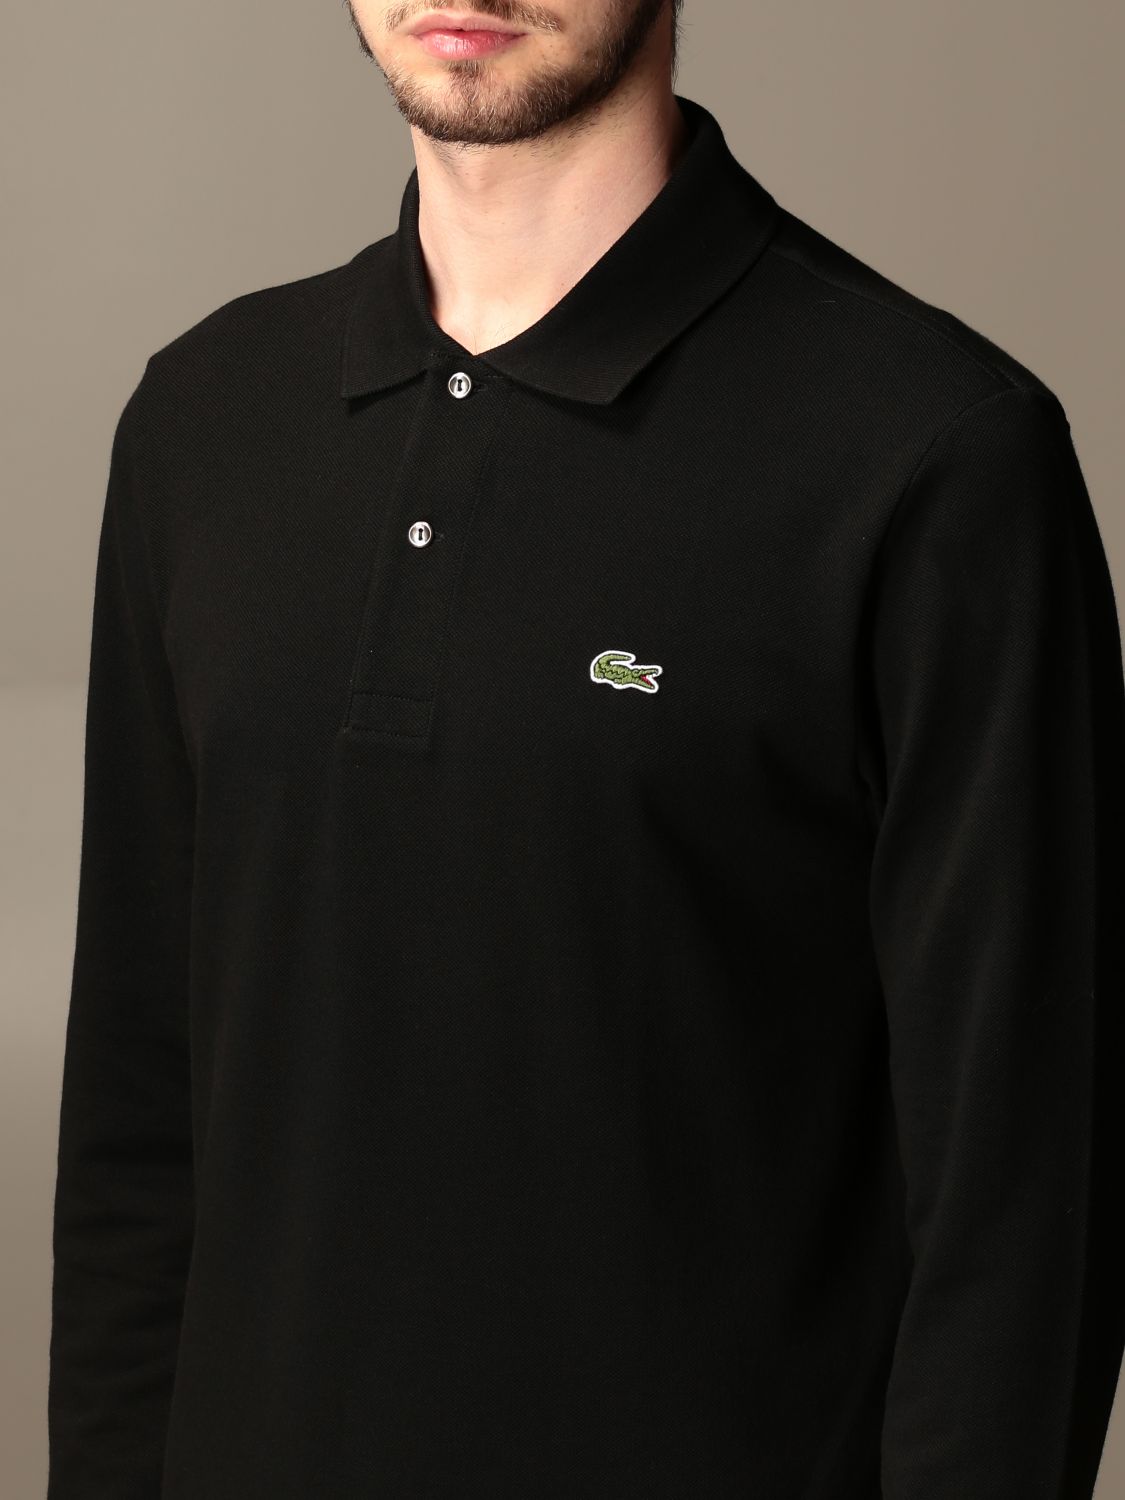 Lacoste Outlet: long sleeve polo shirt | Polo Shirt Lacoste Men | Polo Shirt Lacoste L1312 GIGLIO.COM